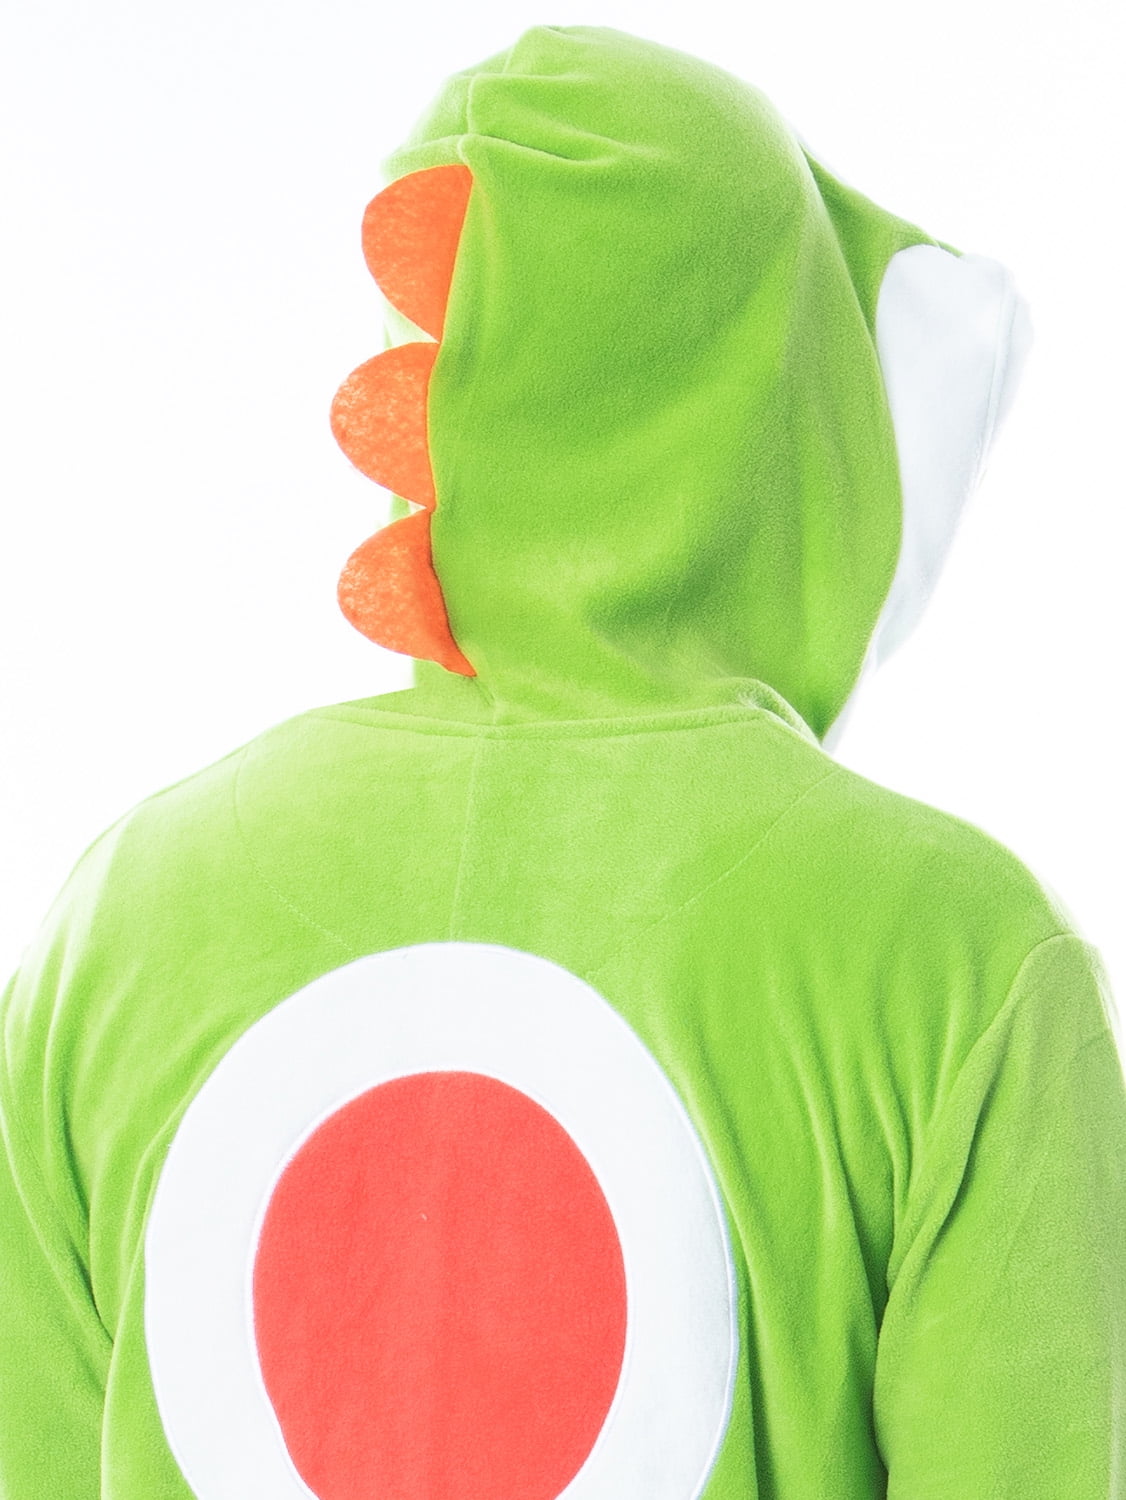 SAZAC Kigurumi Super Mario Bros. Yoshi - Onesie Jumpsuit Halloween Costume